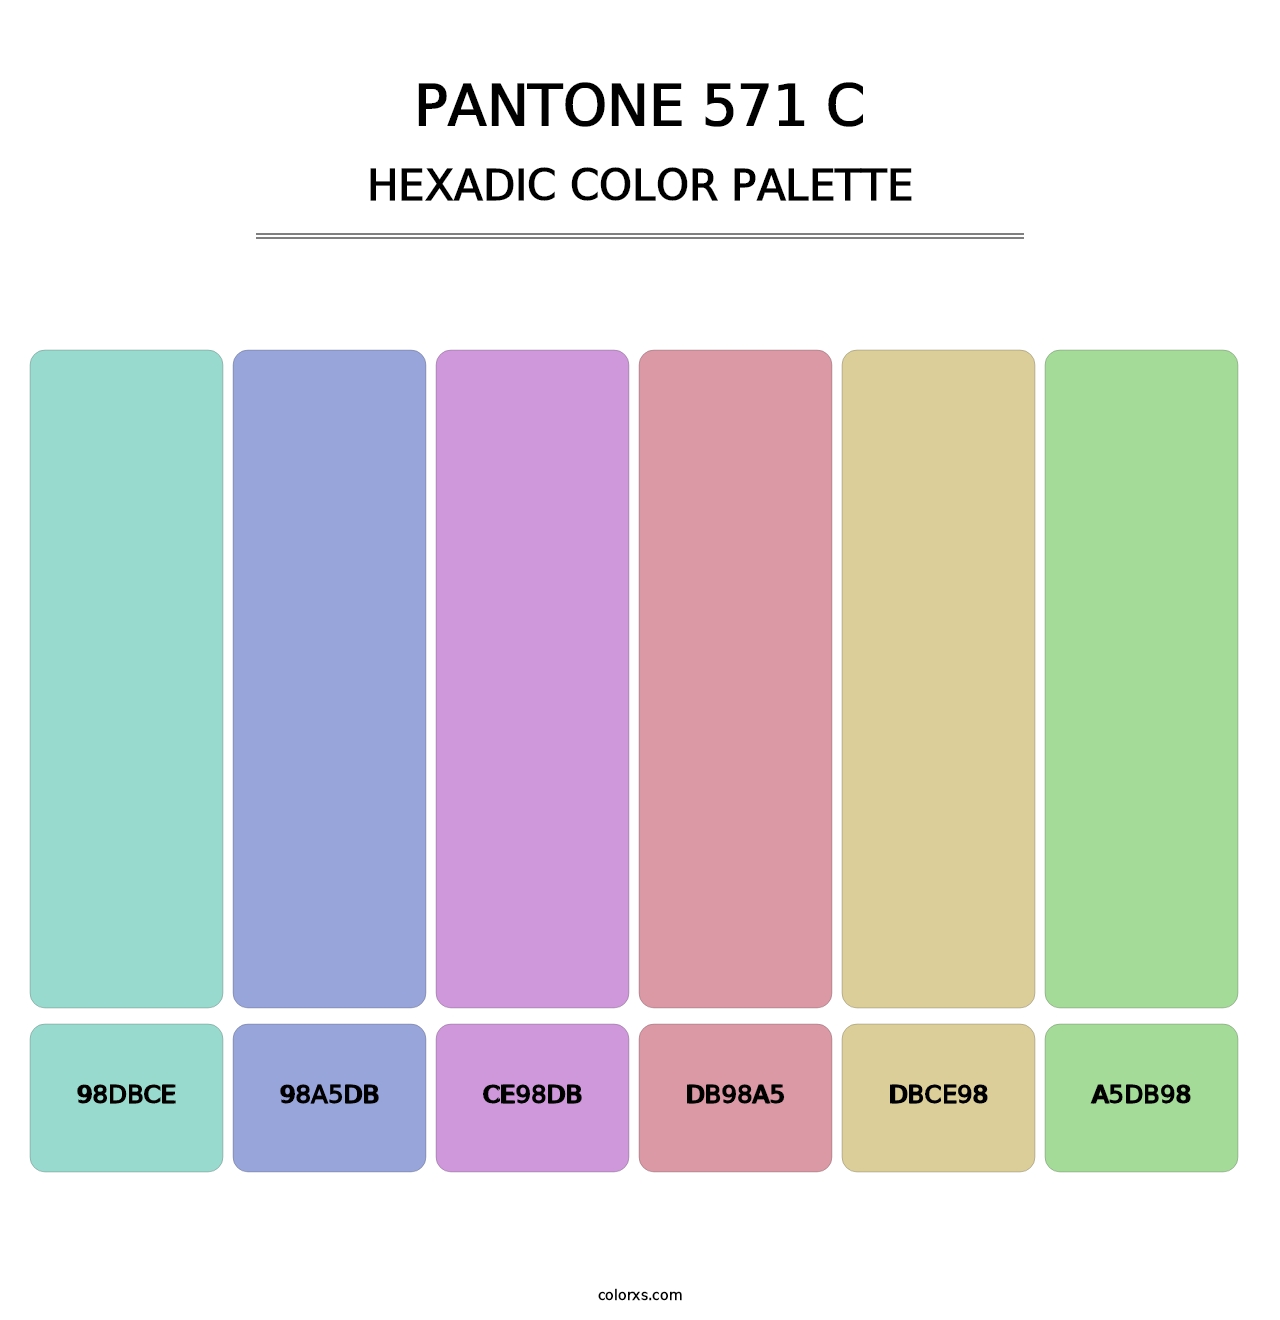 PANTONE 571 C - Hexadic Color Palette